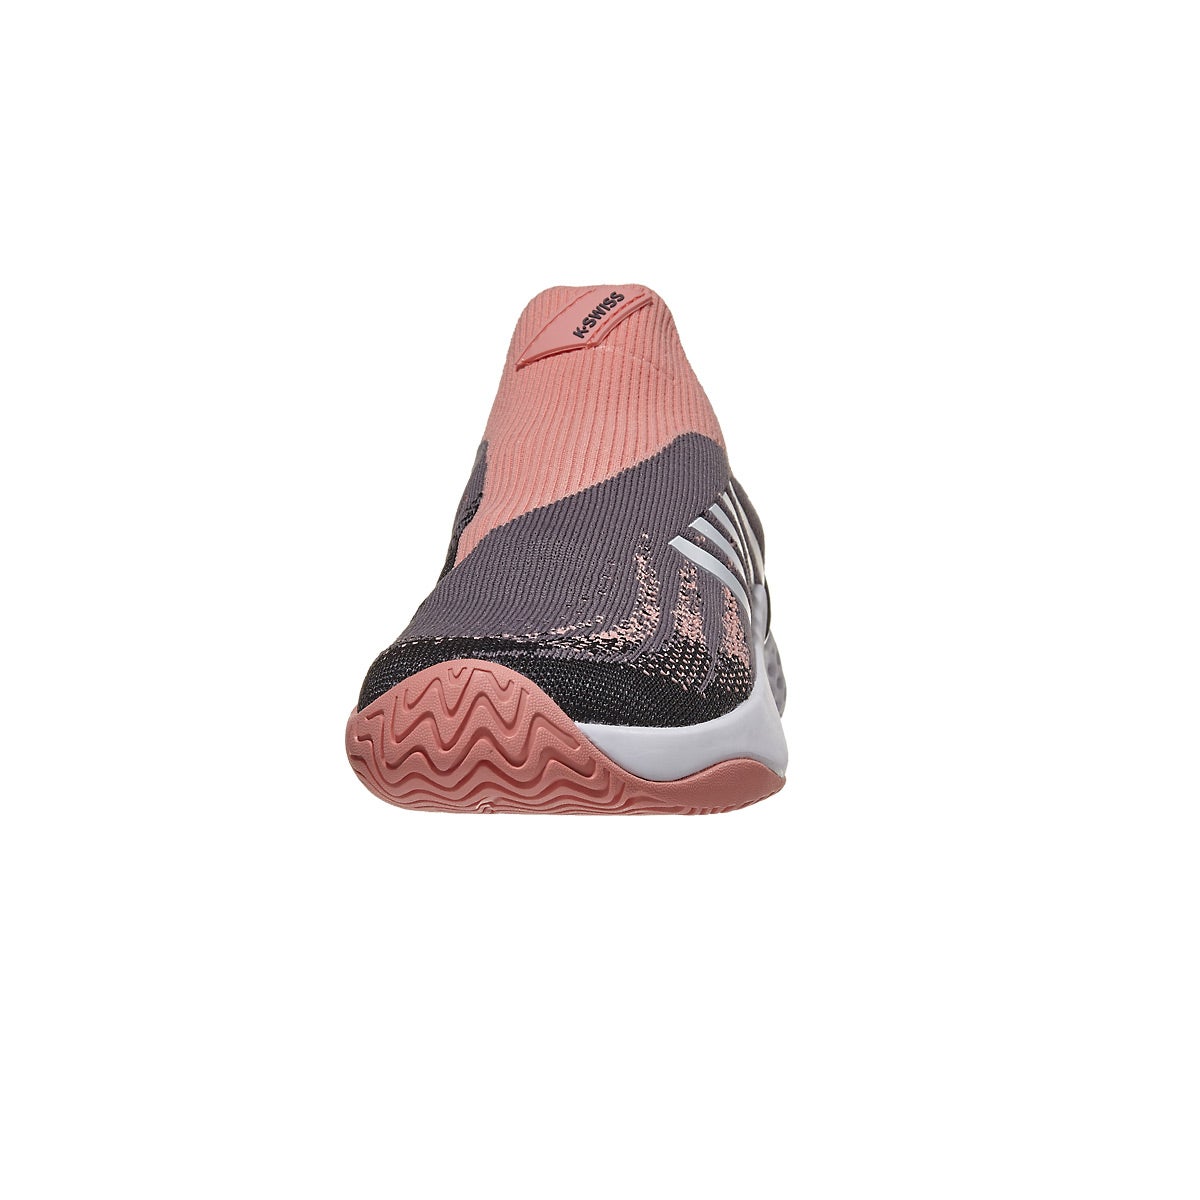 aero shoes official website